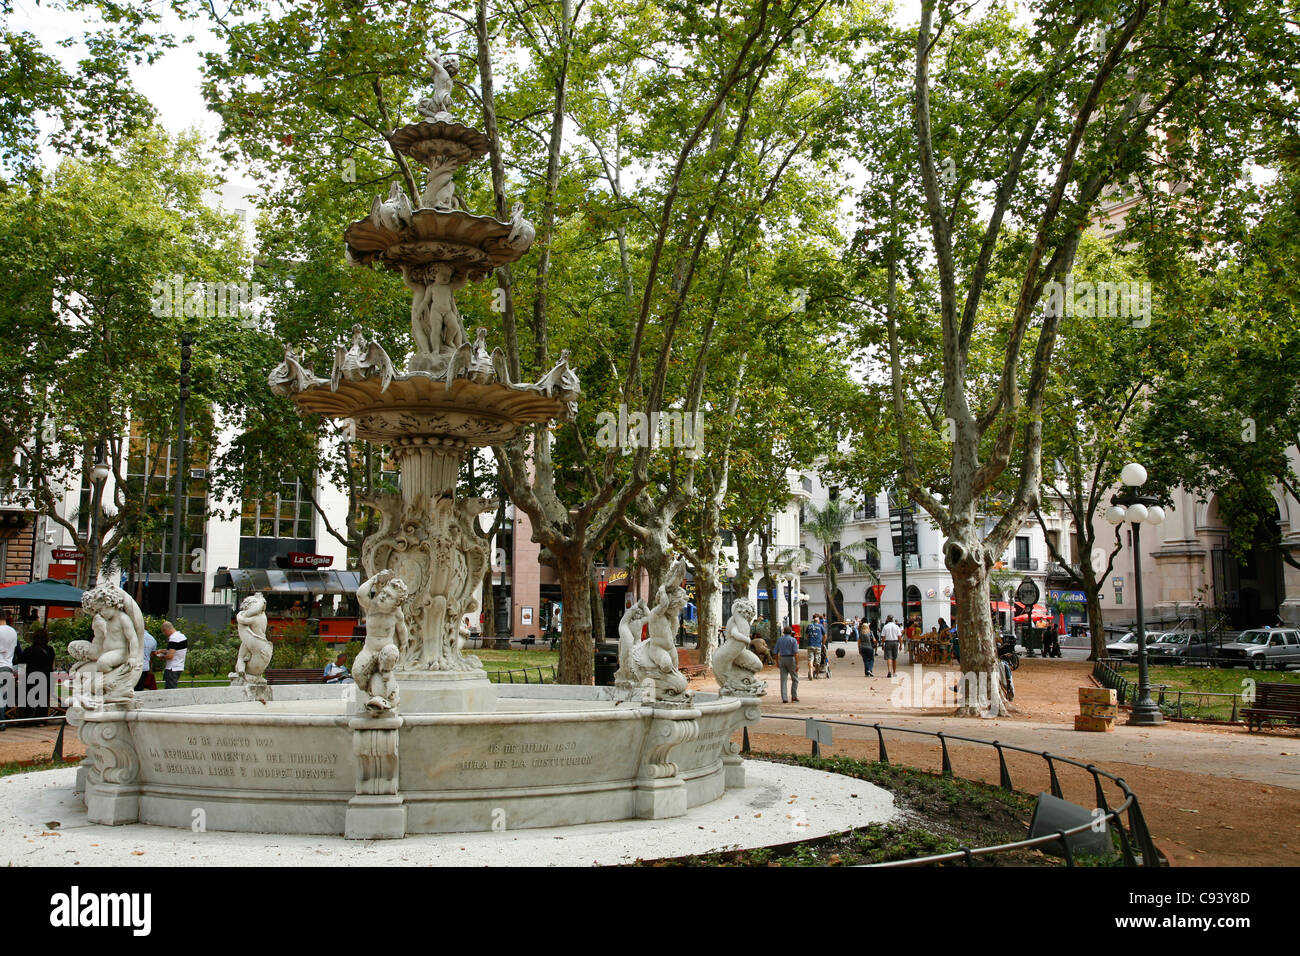 Plaza De La Constitucion auch bekannt als Plaza Matriz ist der älteste Platz in der Altstadt. Montevideo, Uruguay. Stockfoto